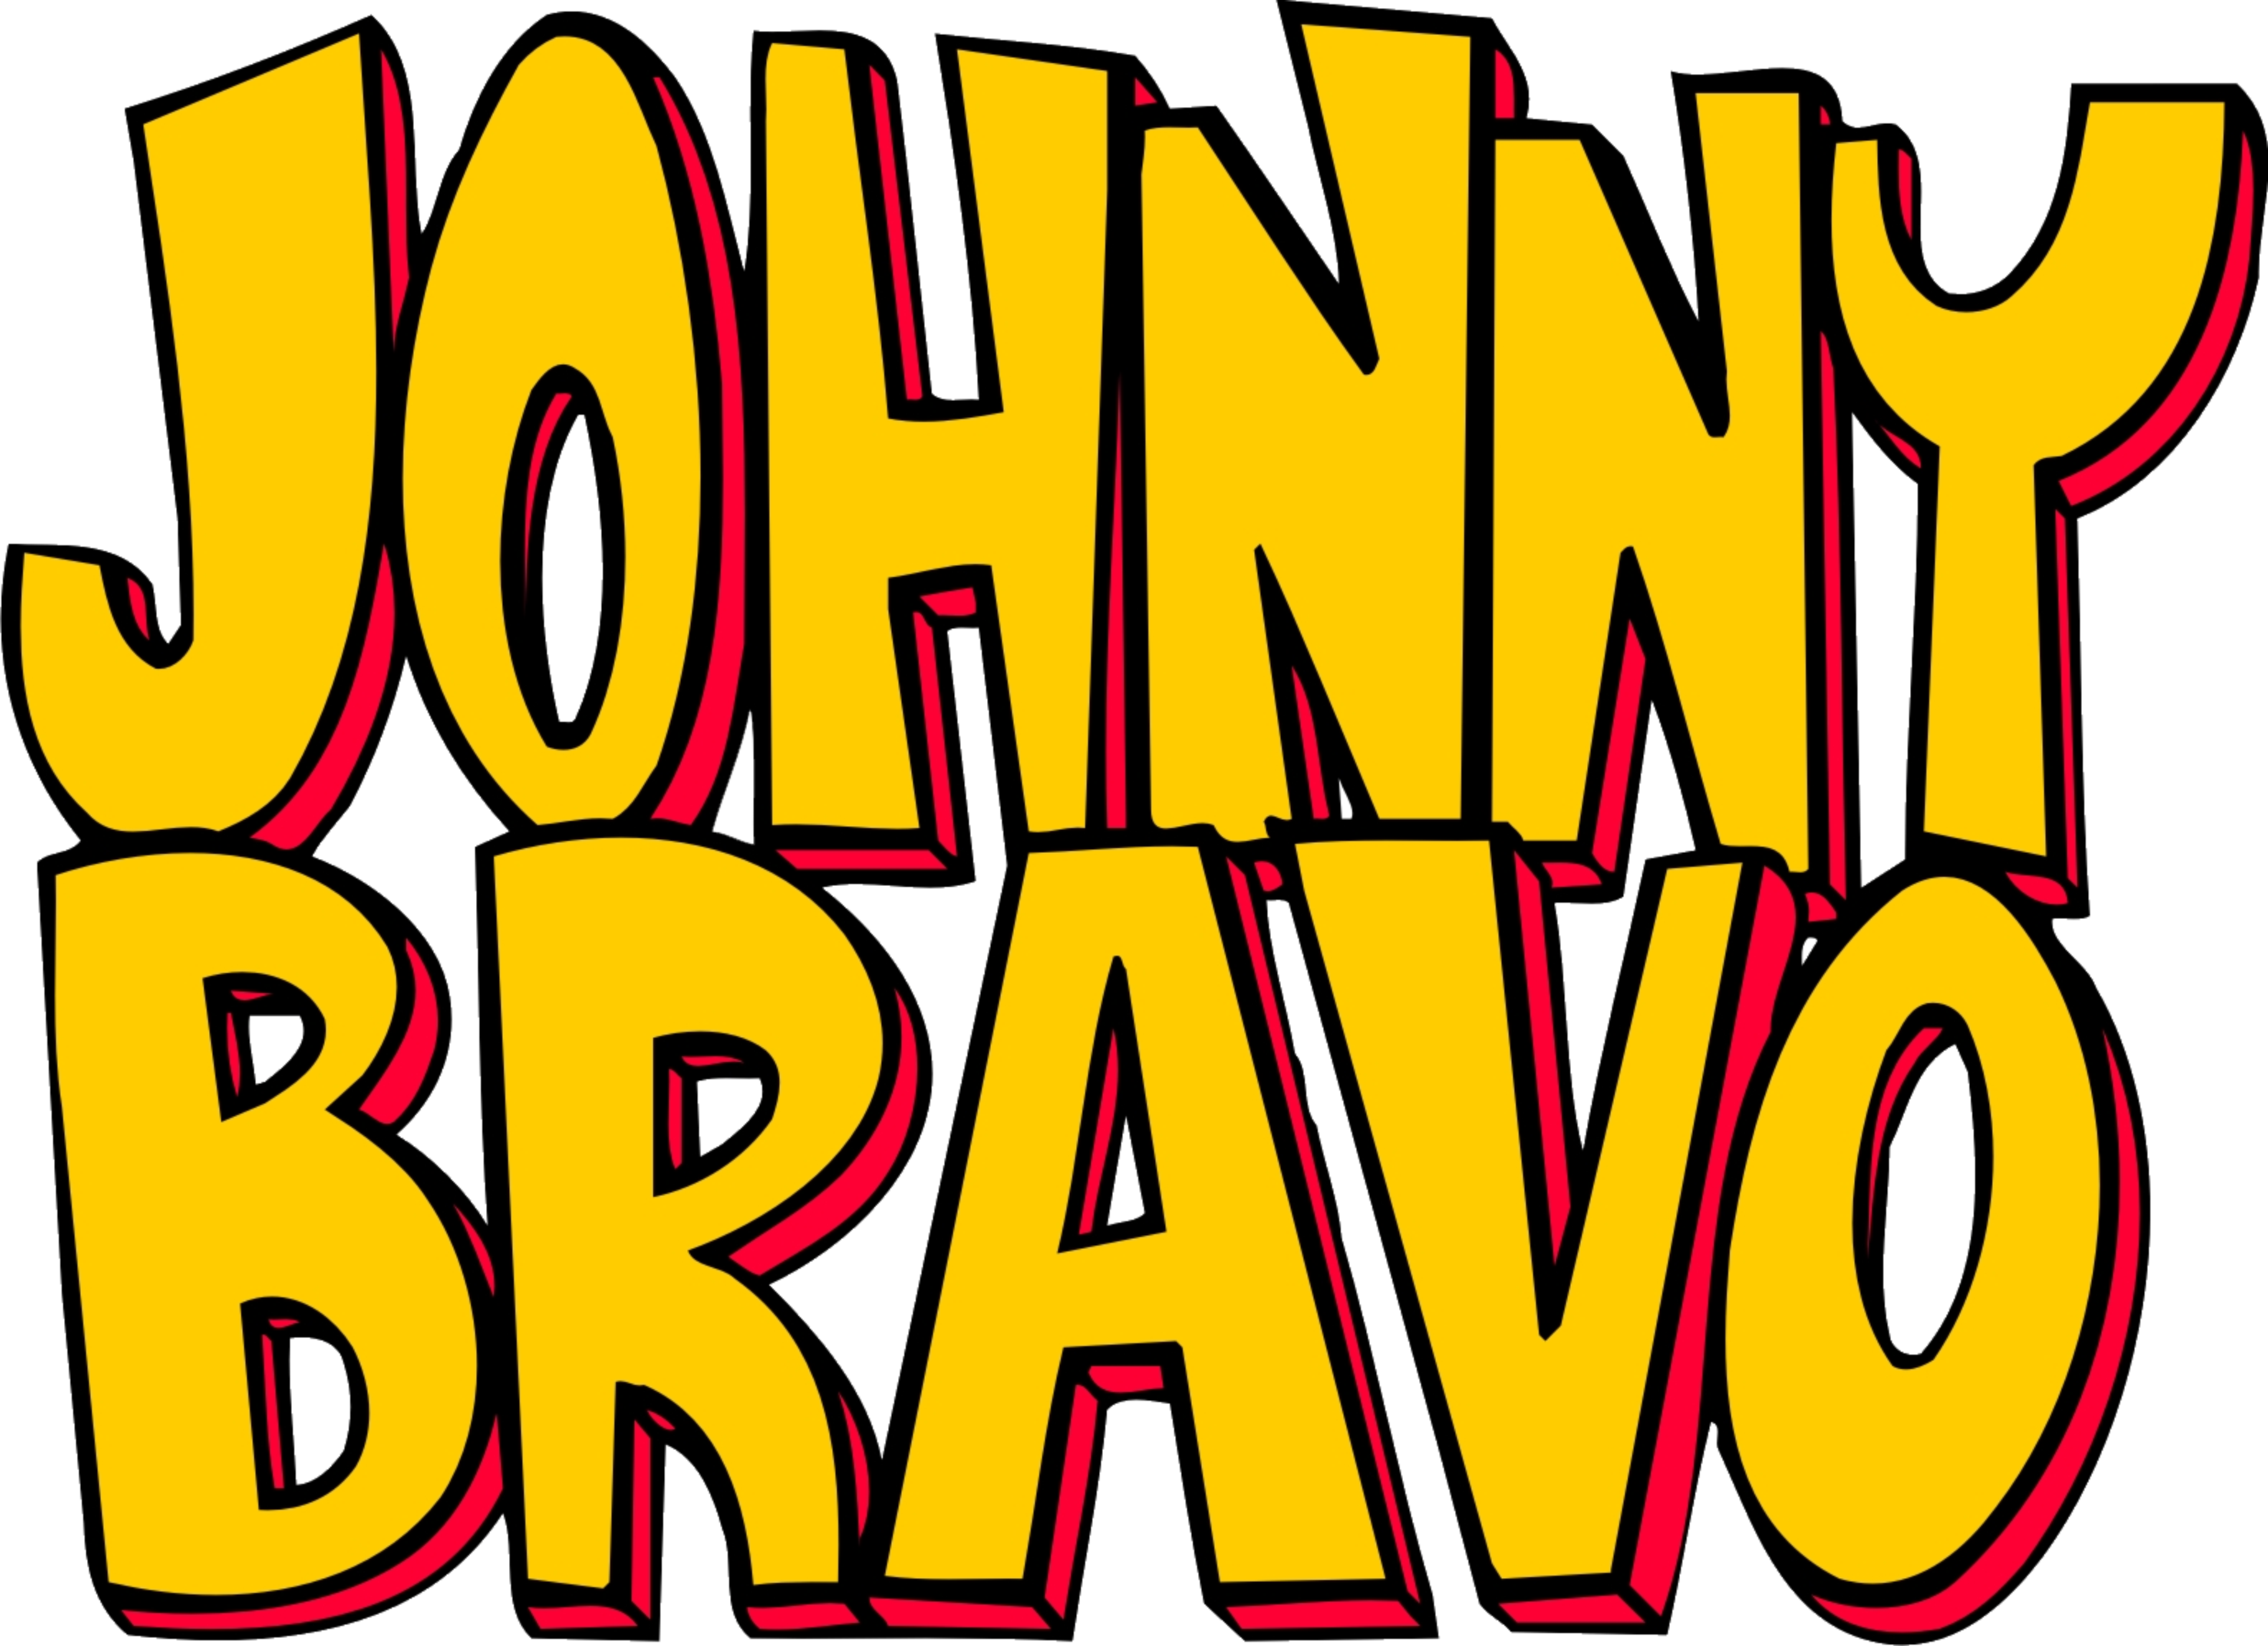 Johnny Bravo (7 DVDs Box Set)